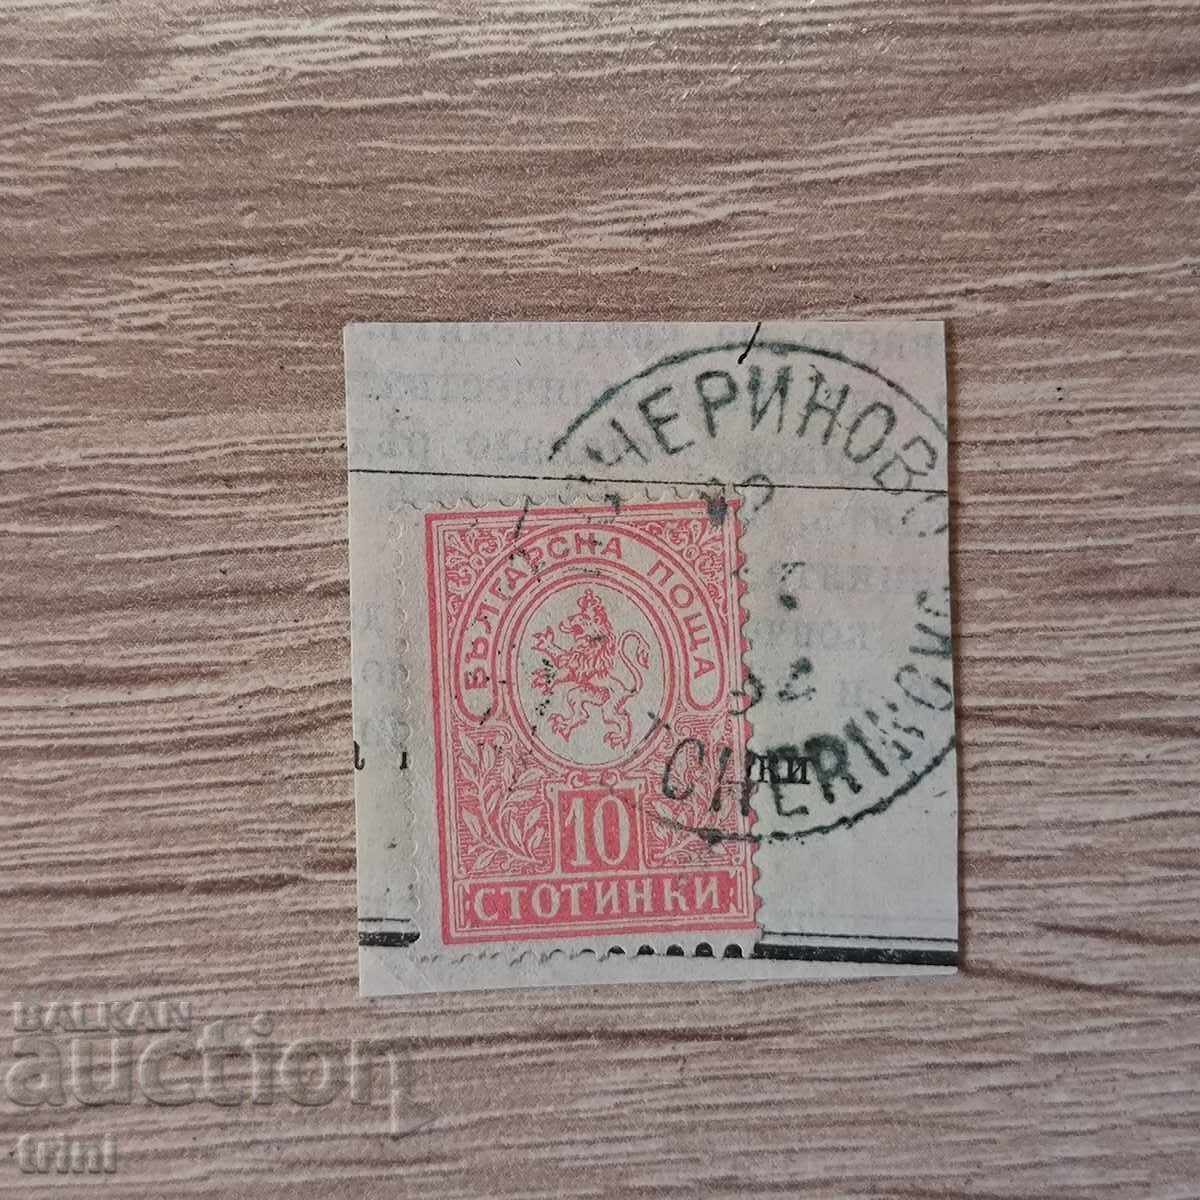 Small lion 1889 10 cents stamp Kocherinovo